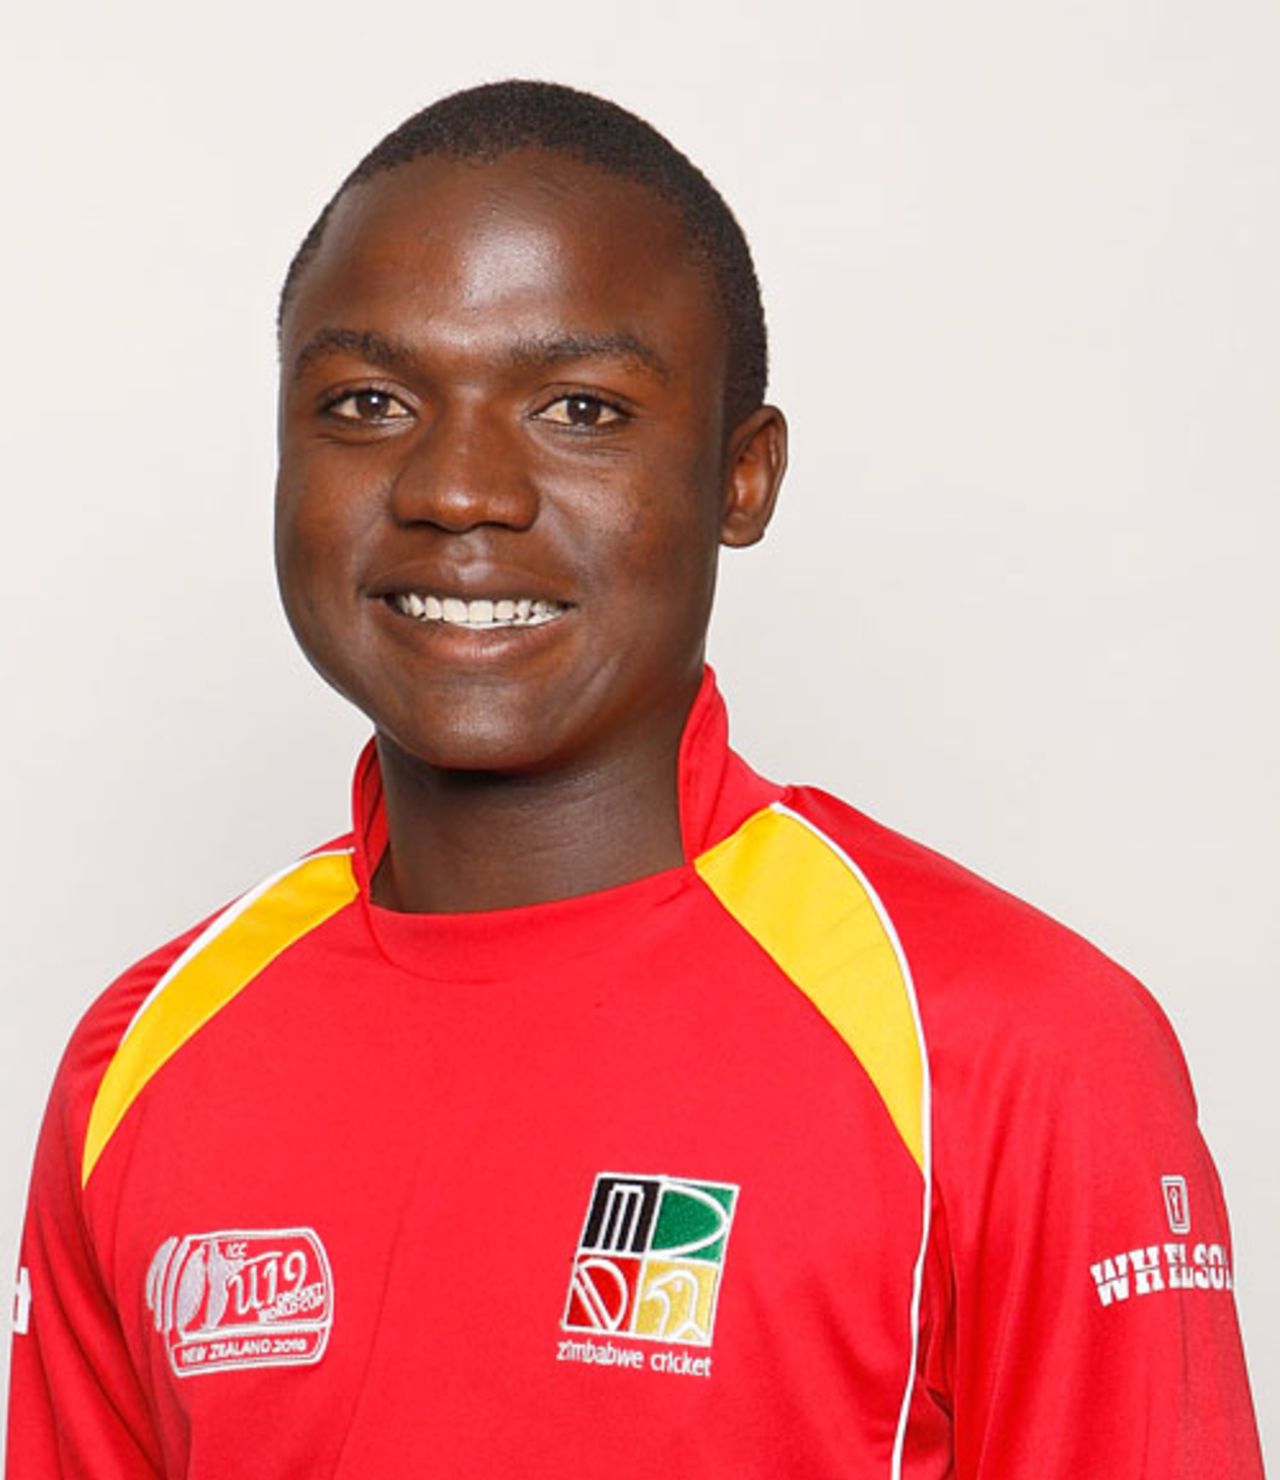 Natsai Mushangwe at the Under-19 World Cup, January 2010